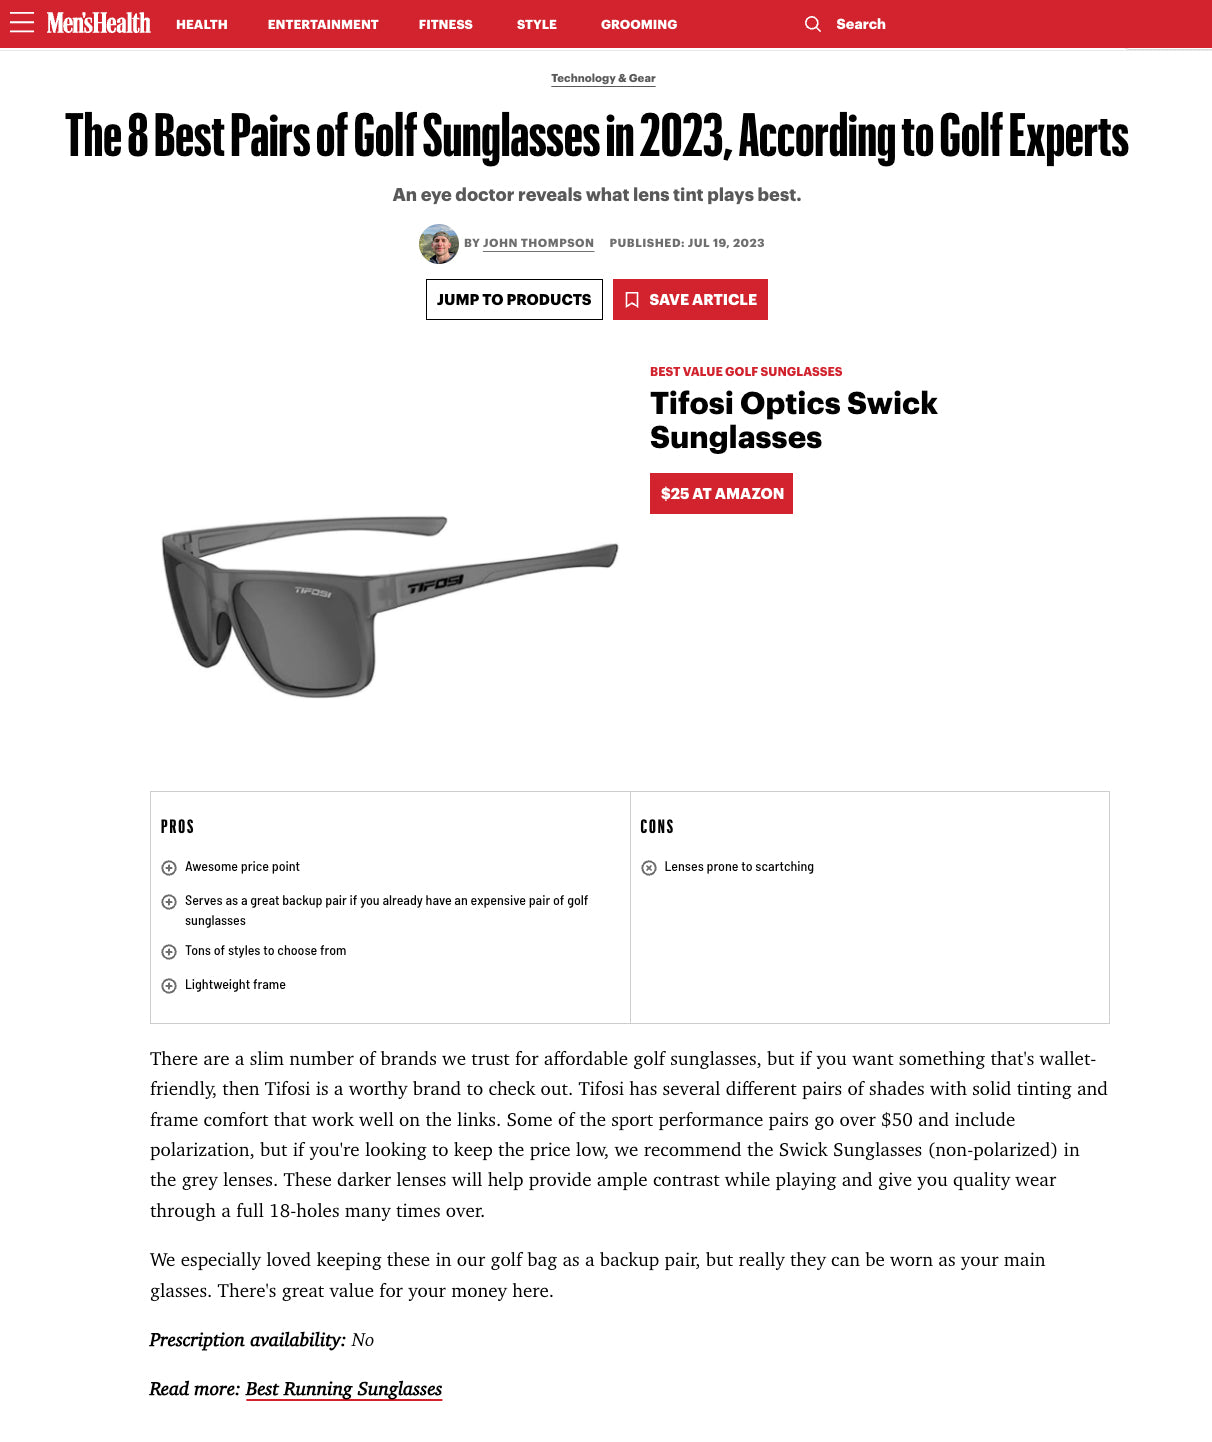 Swick Sunglasses Review - Men's Health July 2023